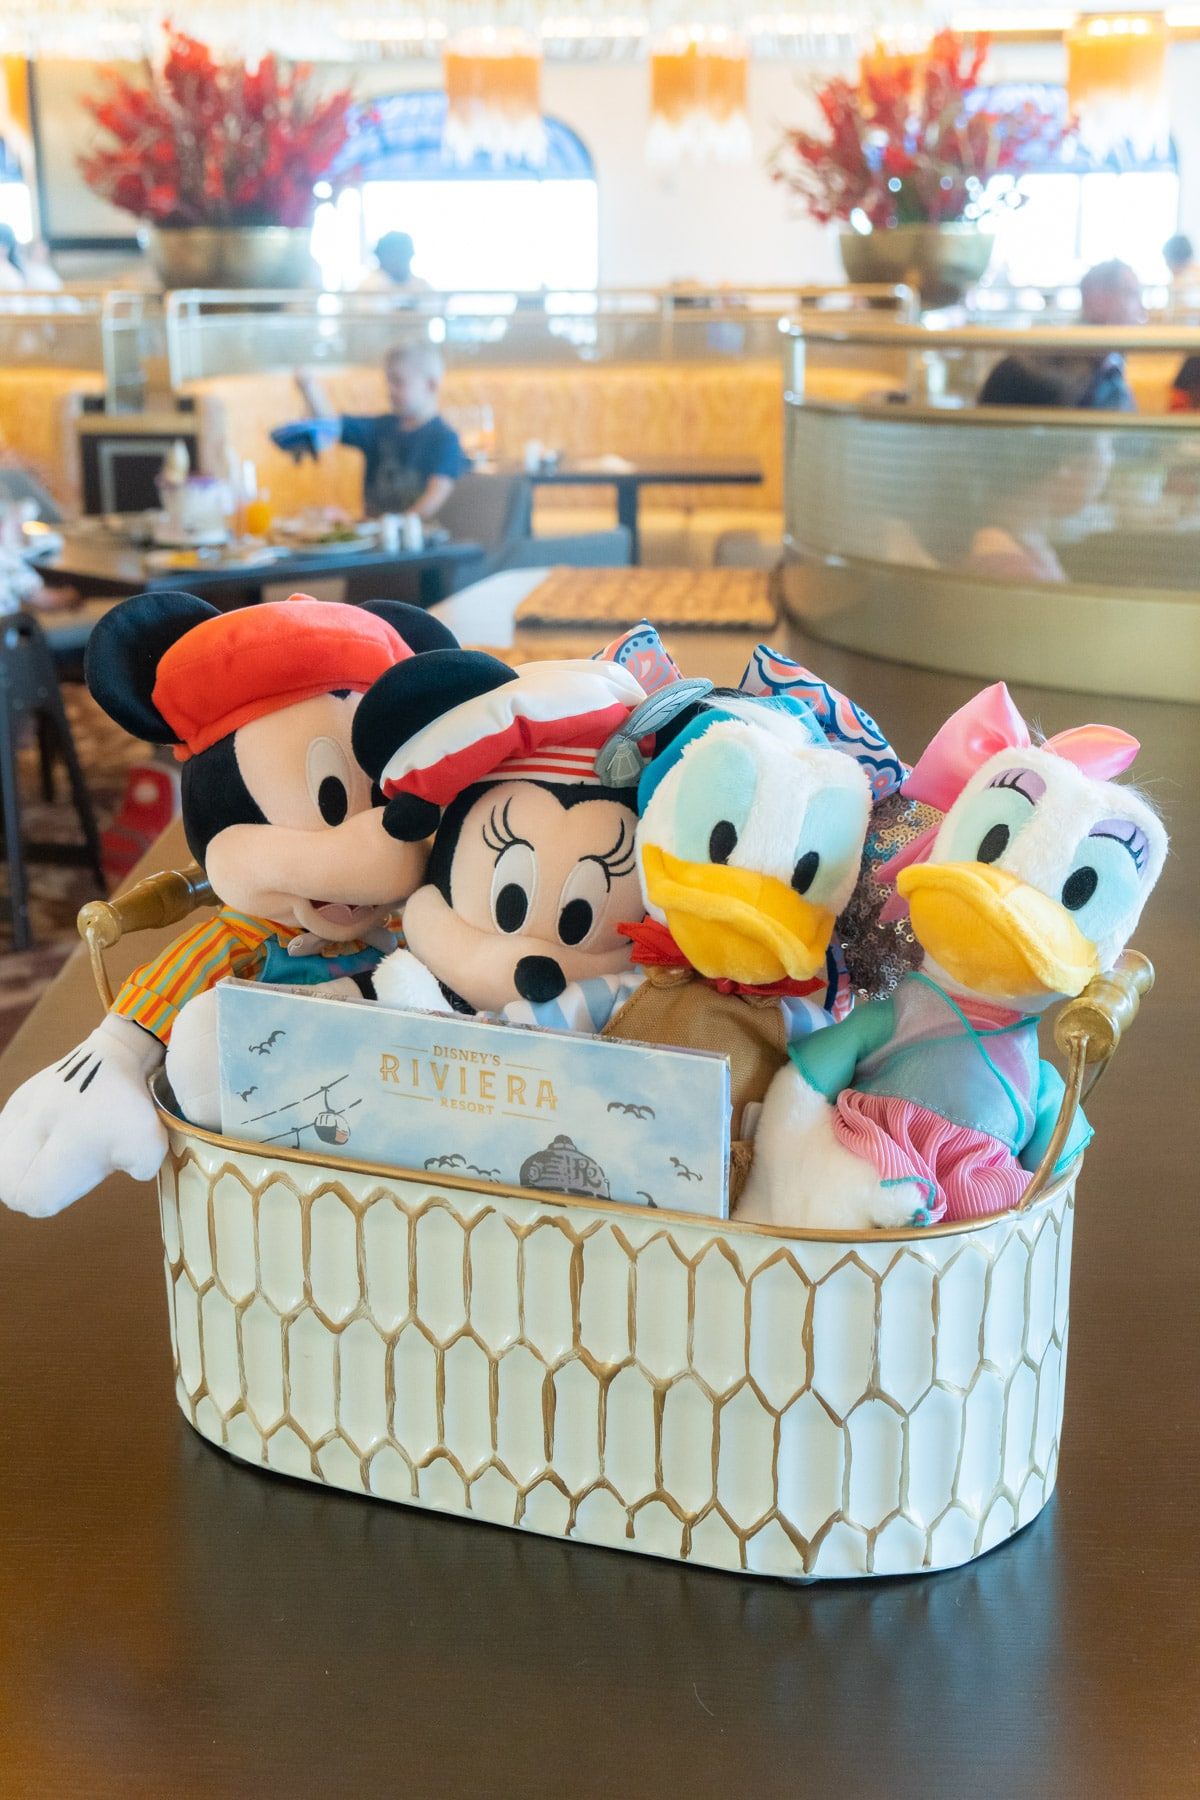 Basket na may plush na sina Mickey, Minnie, Daisy, at Donald